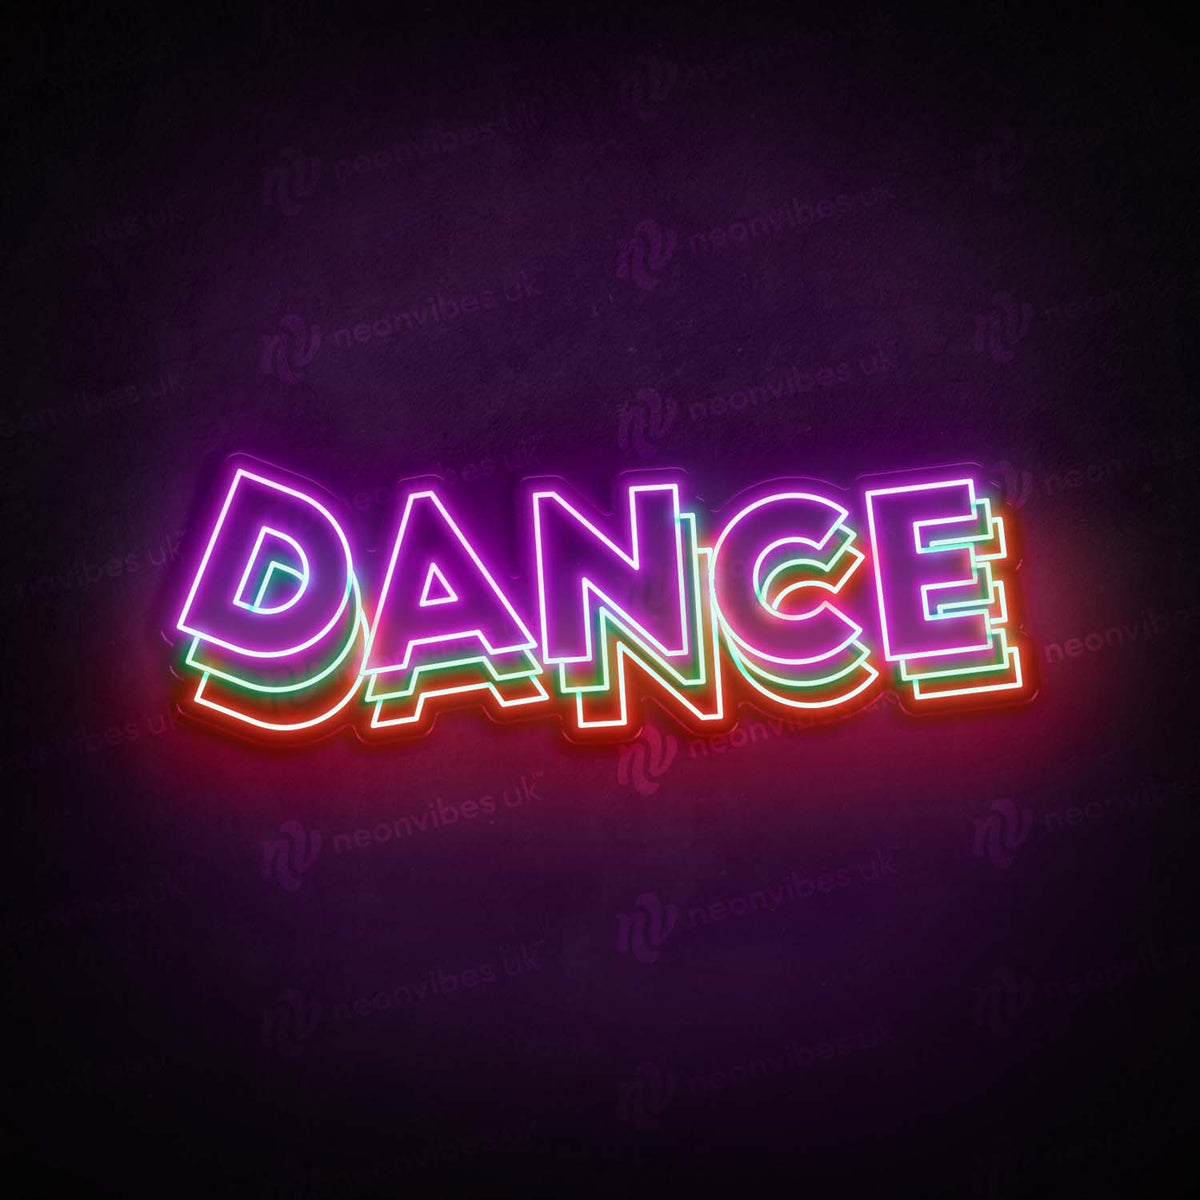 Dance neon sign